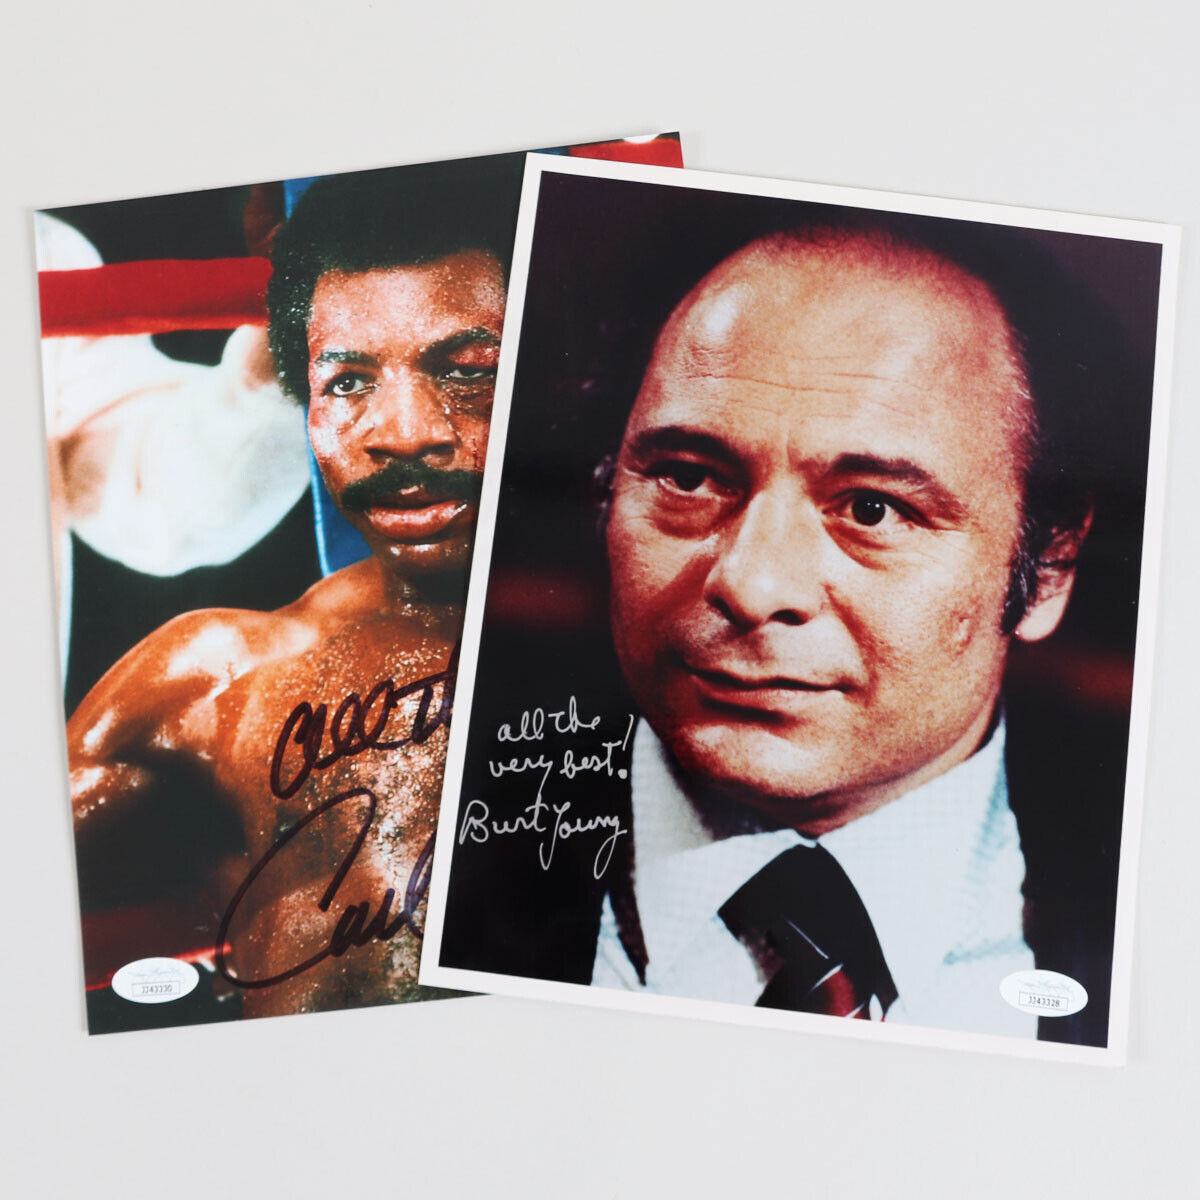 Carl Weathers & Burt Young Signed Photo Poster painting 8x10 Rocky - COA JSA